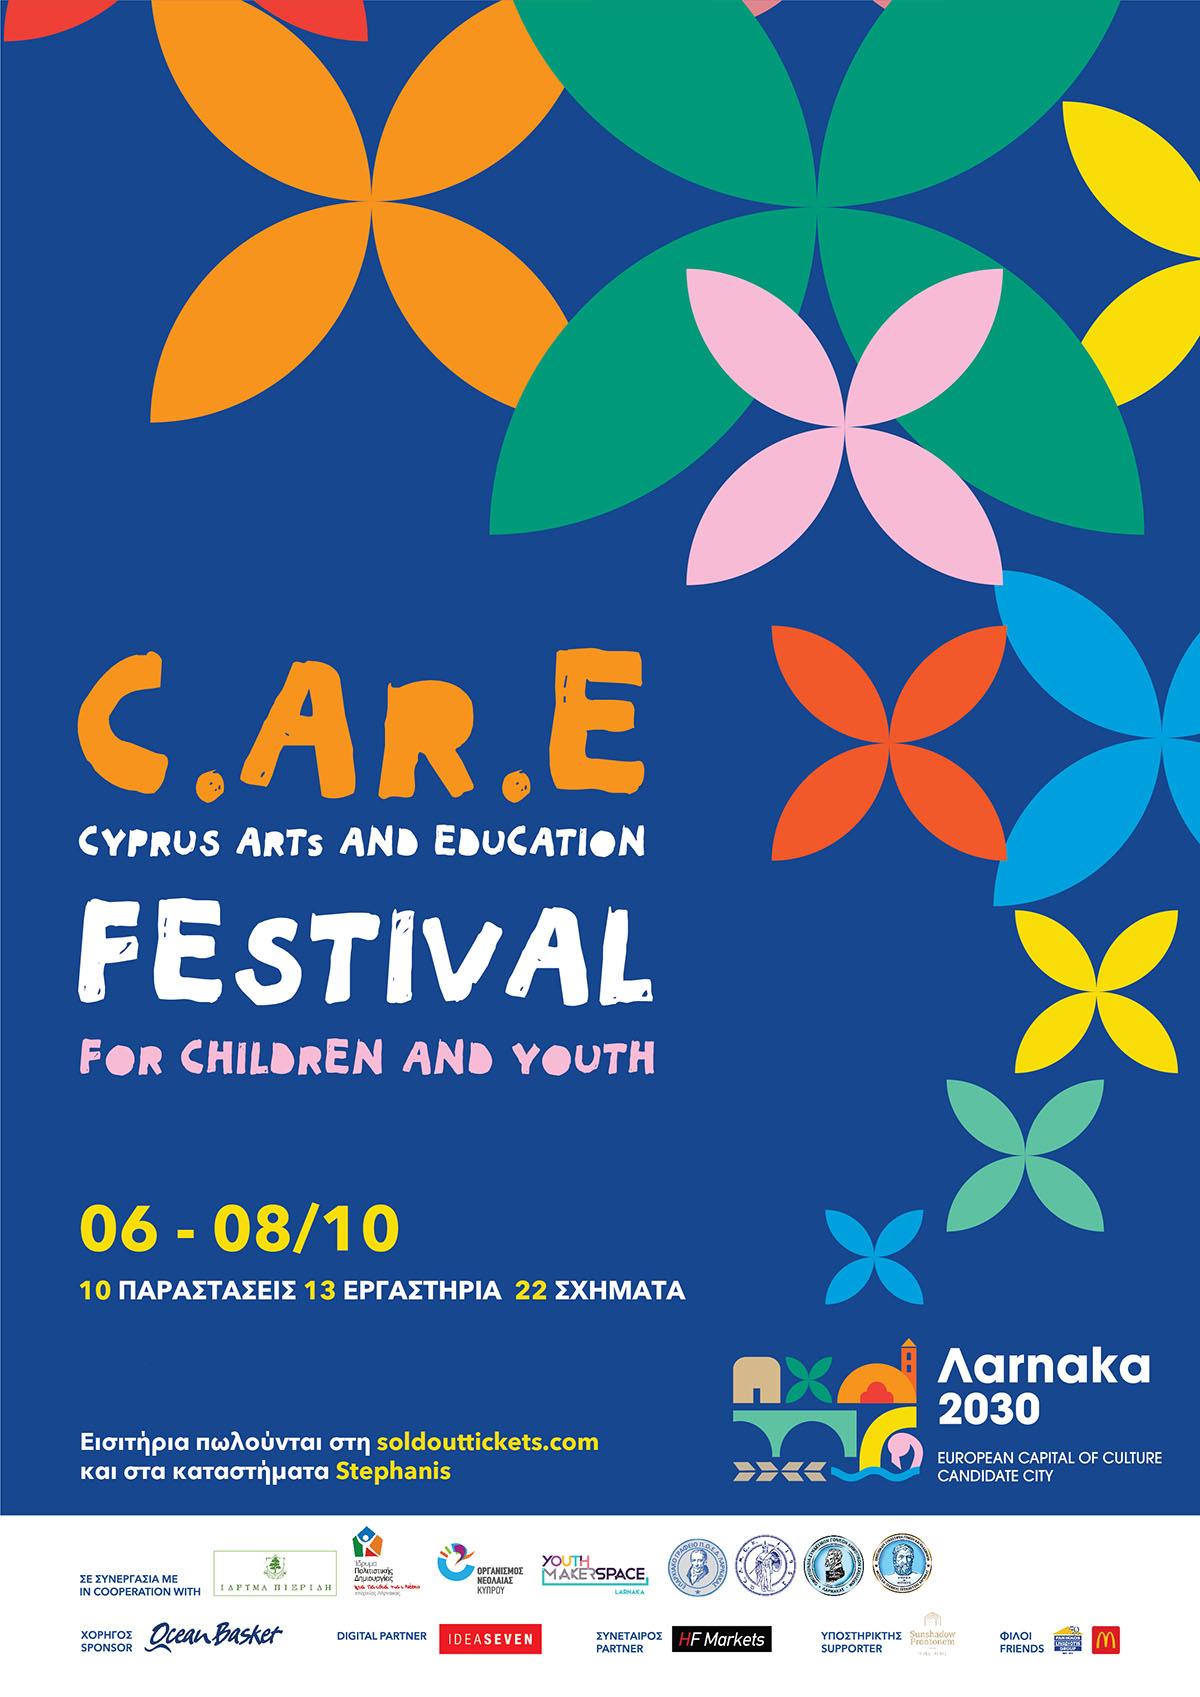 C.AR.E Festival - Cyprus ARts and Education Festival